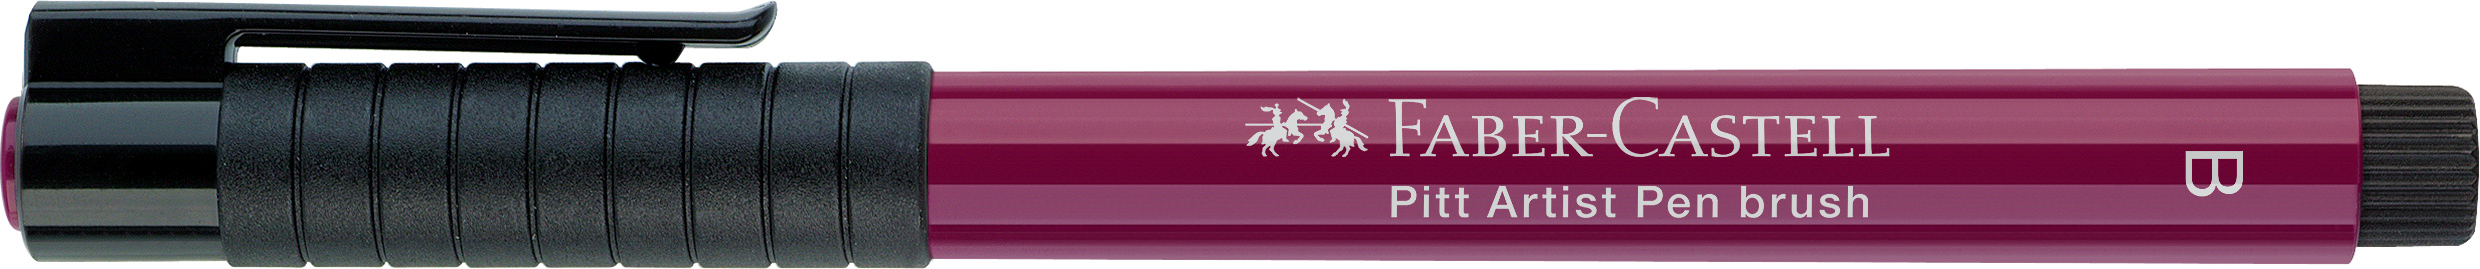 FABER-CASTELL Pitt Artist Pen Brush 2.5mm 167437 magenta